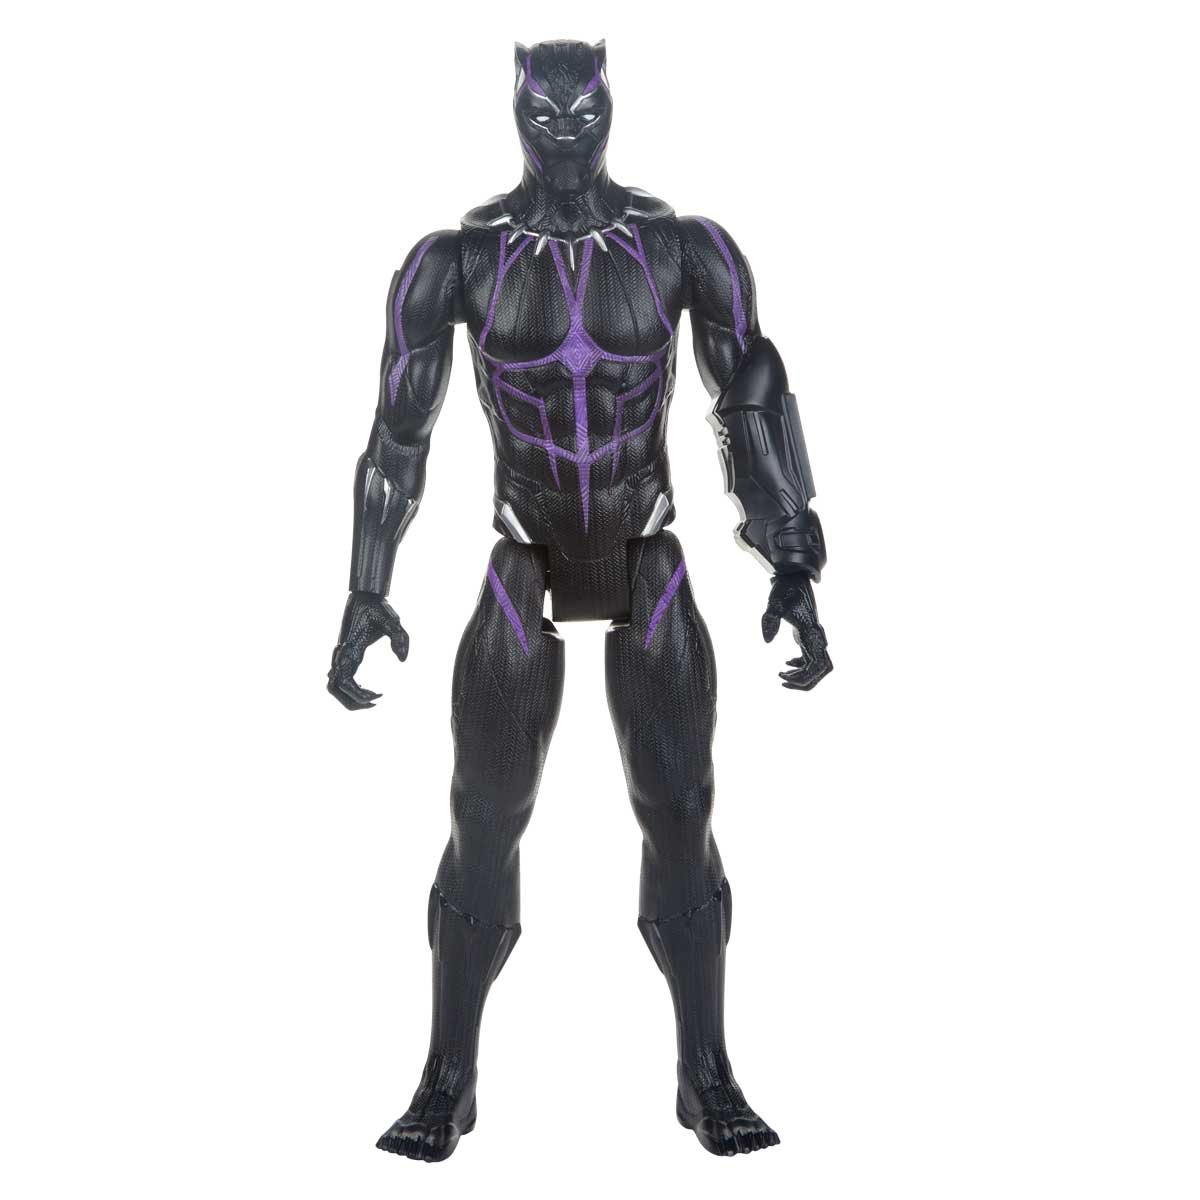 Figura Titan Hero Power Fx Avengers Endgame Black Panther Hasbro